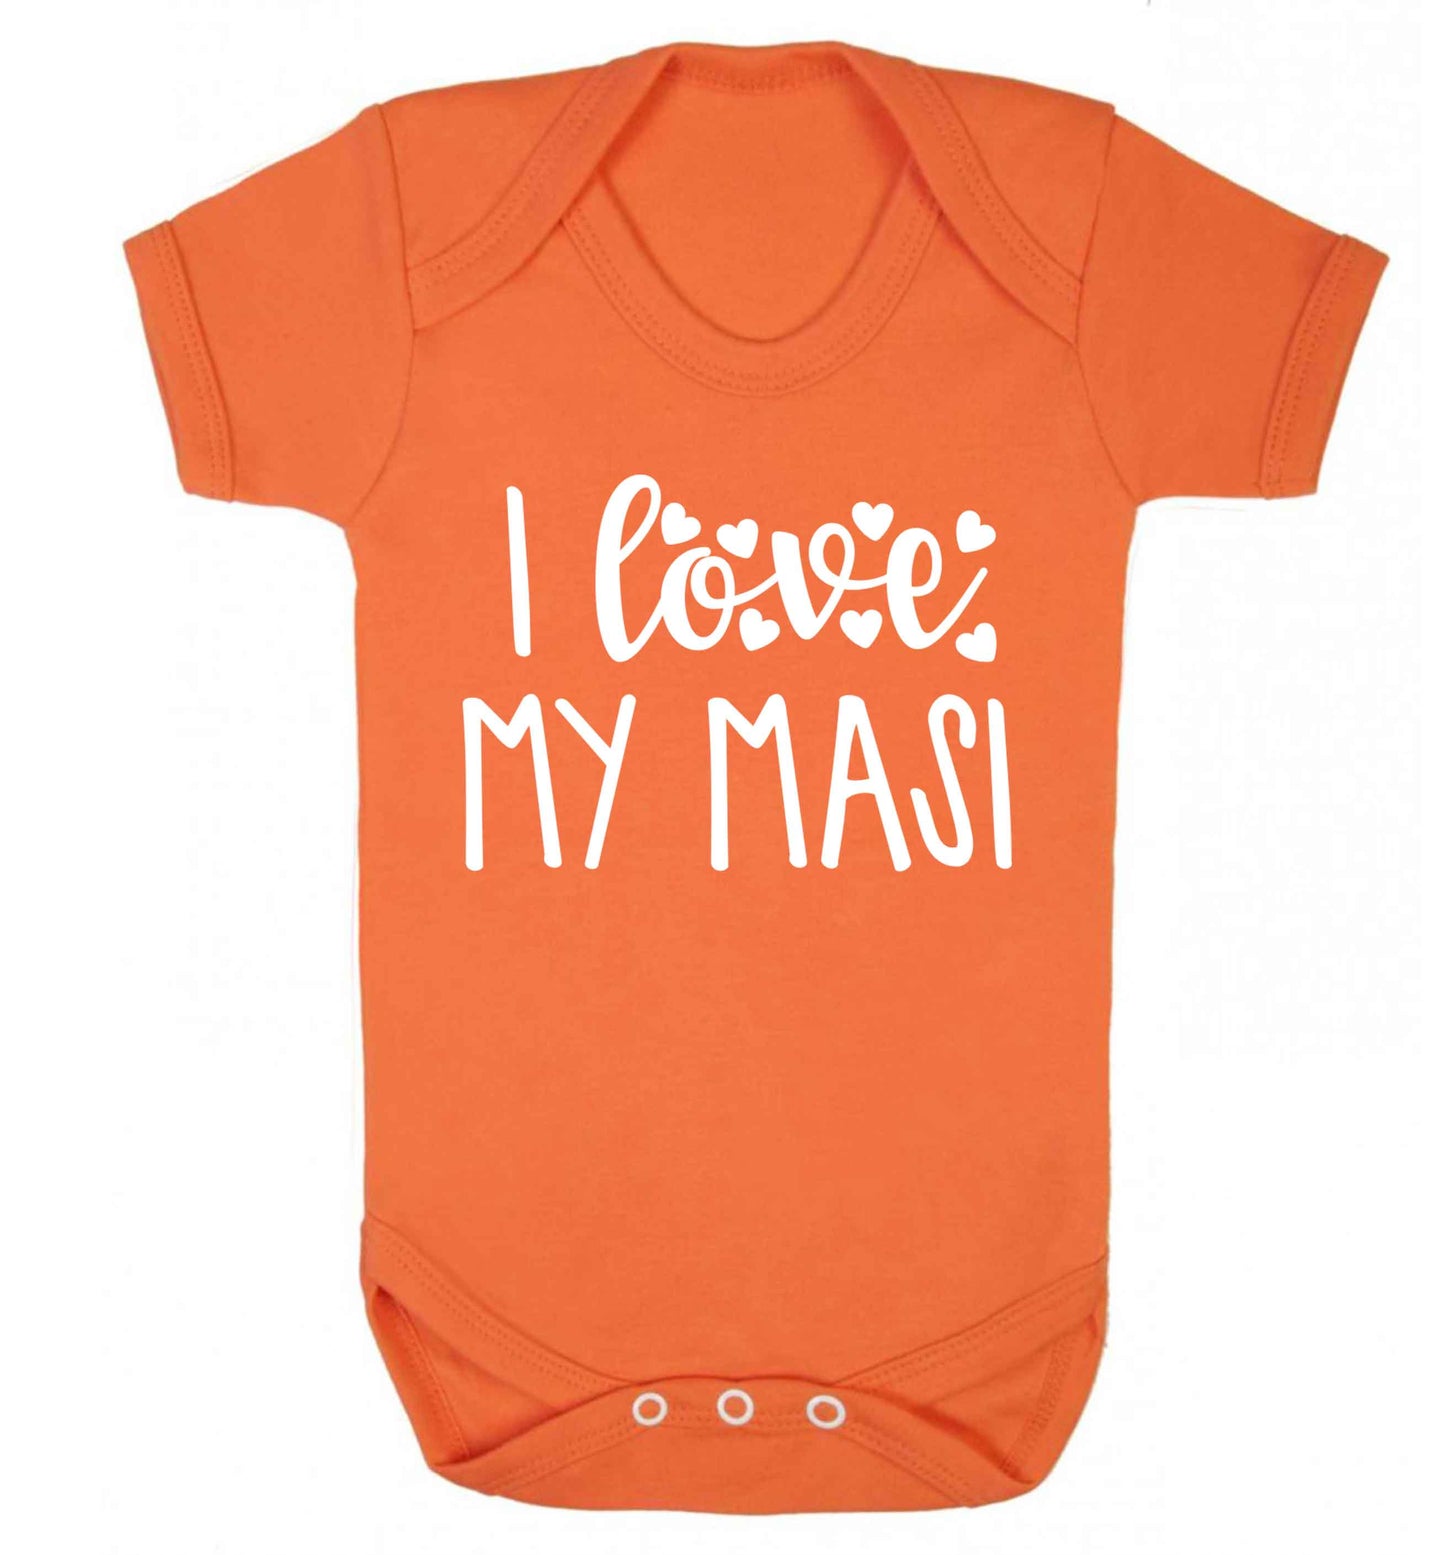 I love my masi Baby Vest orange 18-24 months